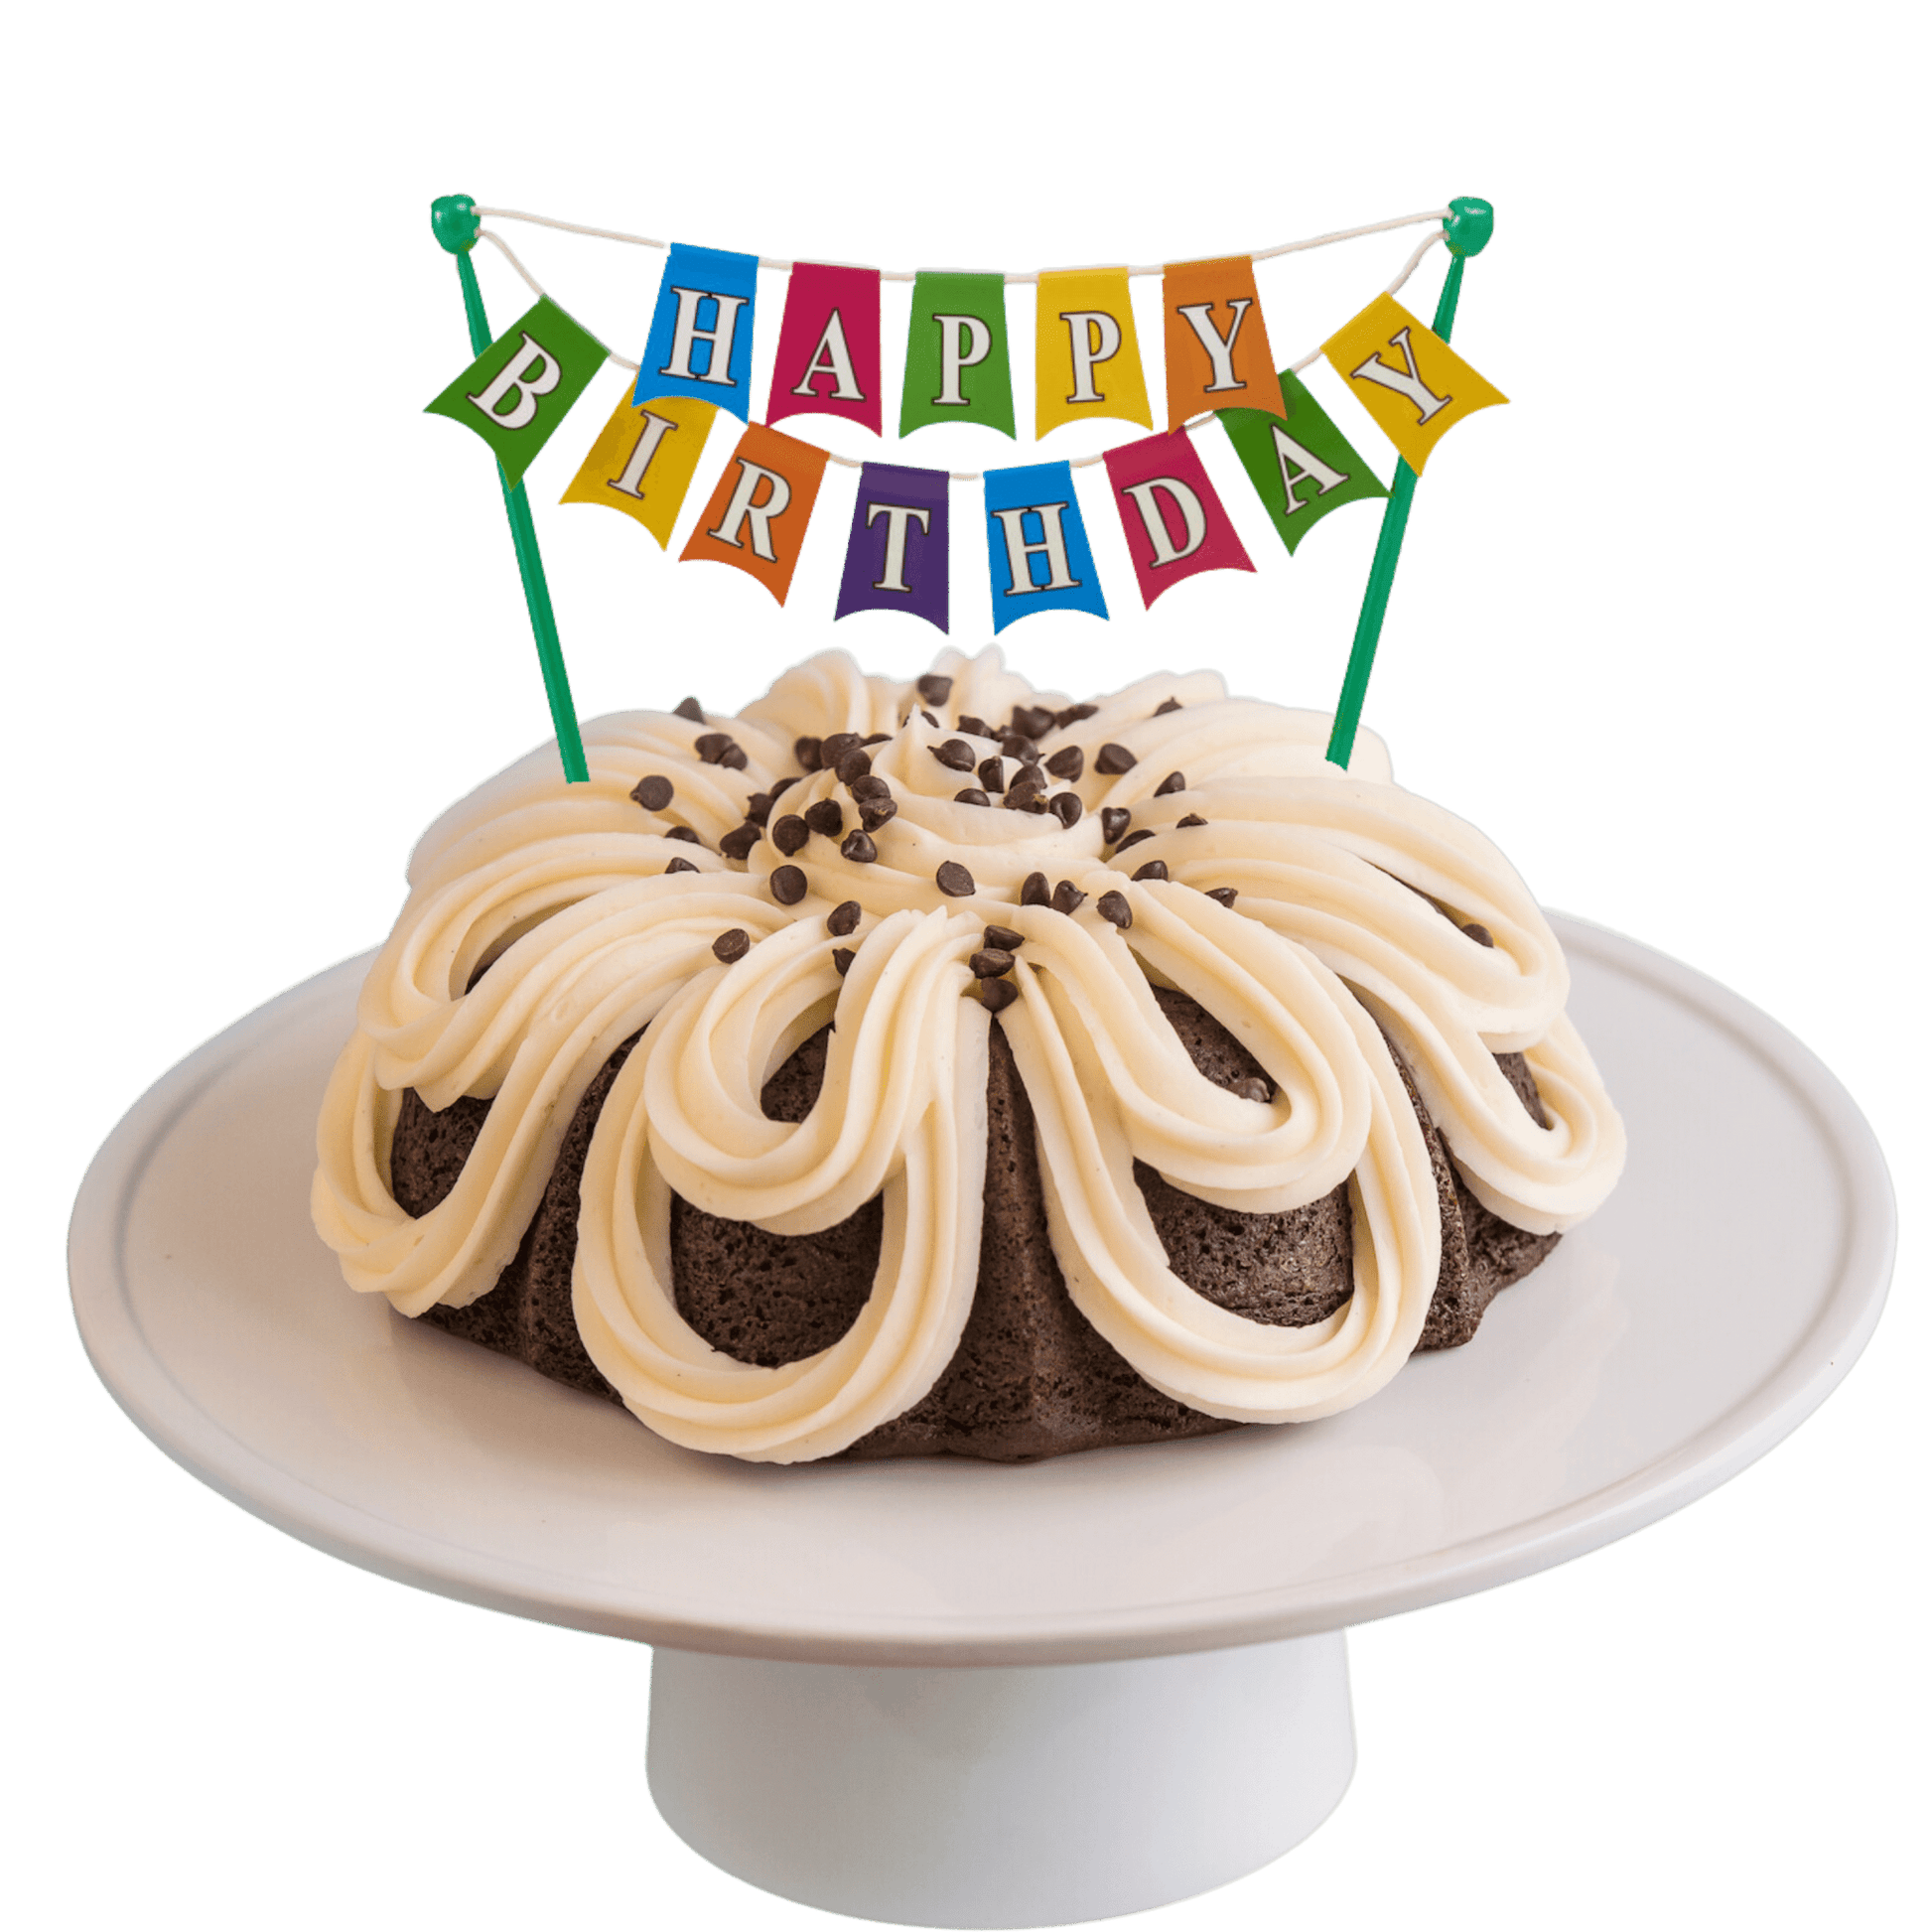 Double Chocolate | "HAPPY BIRTHDAY" Banner Bundt Cake - 